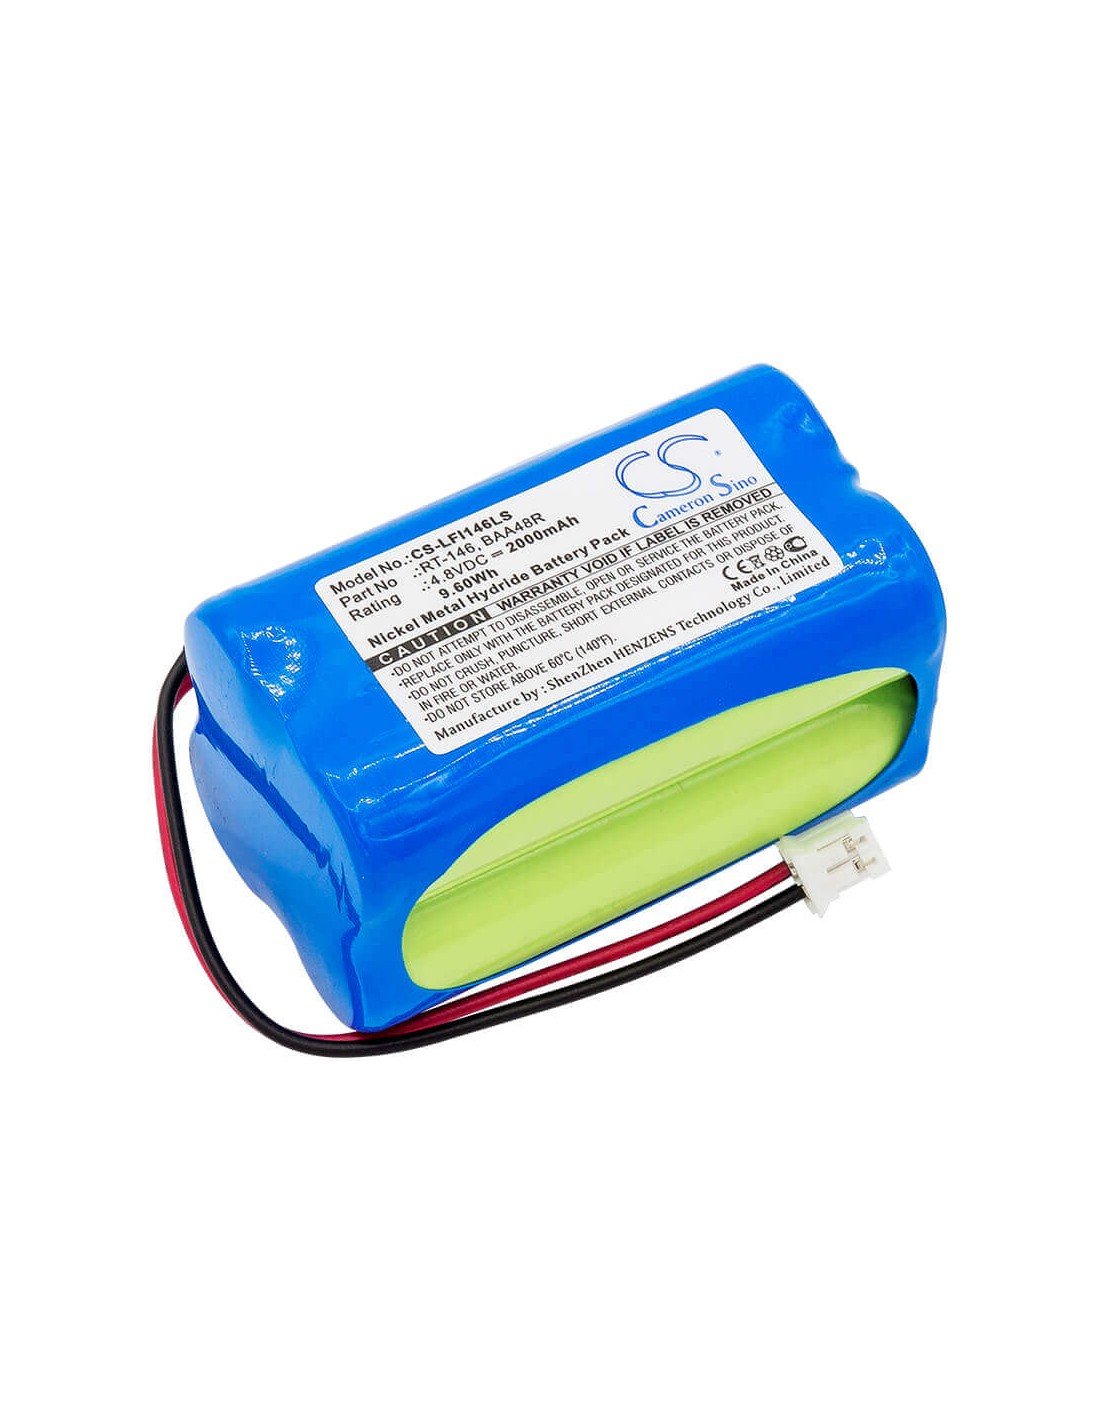 Extended Battery for Lfi, Daybrite Emergi-lite Baa48r, Light Alarms Bl93nc487, 4.8V, 2000mAh - 9.60Wh